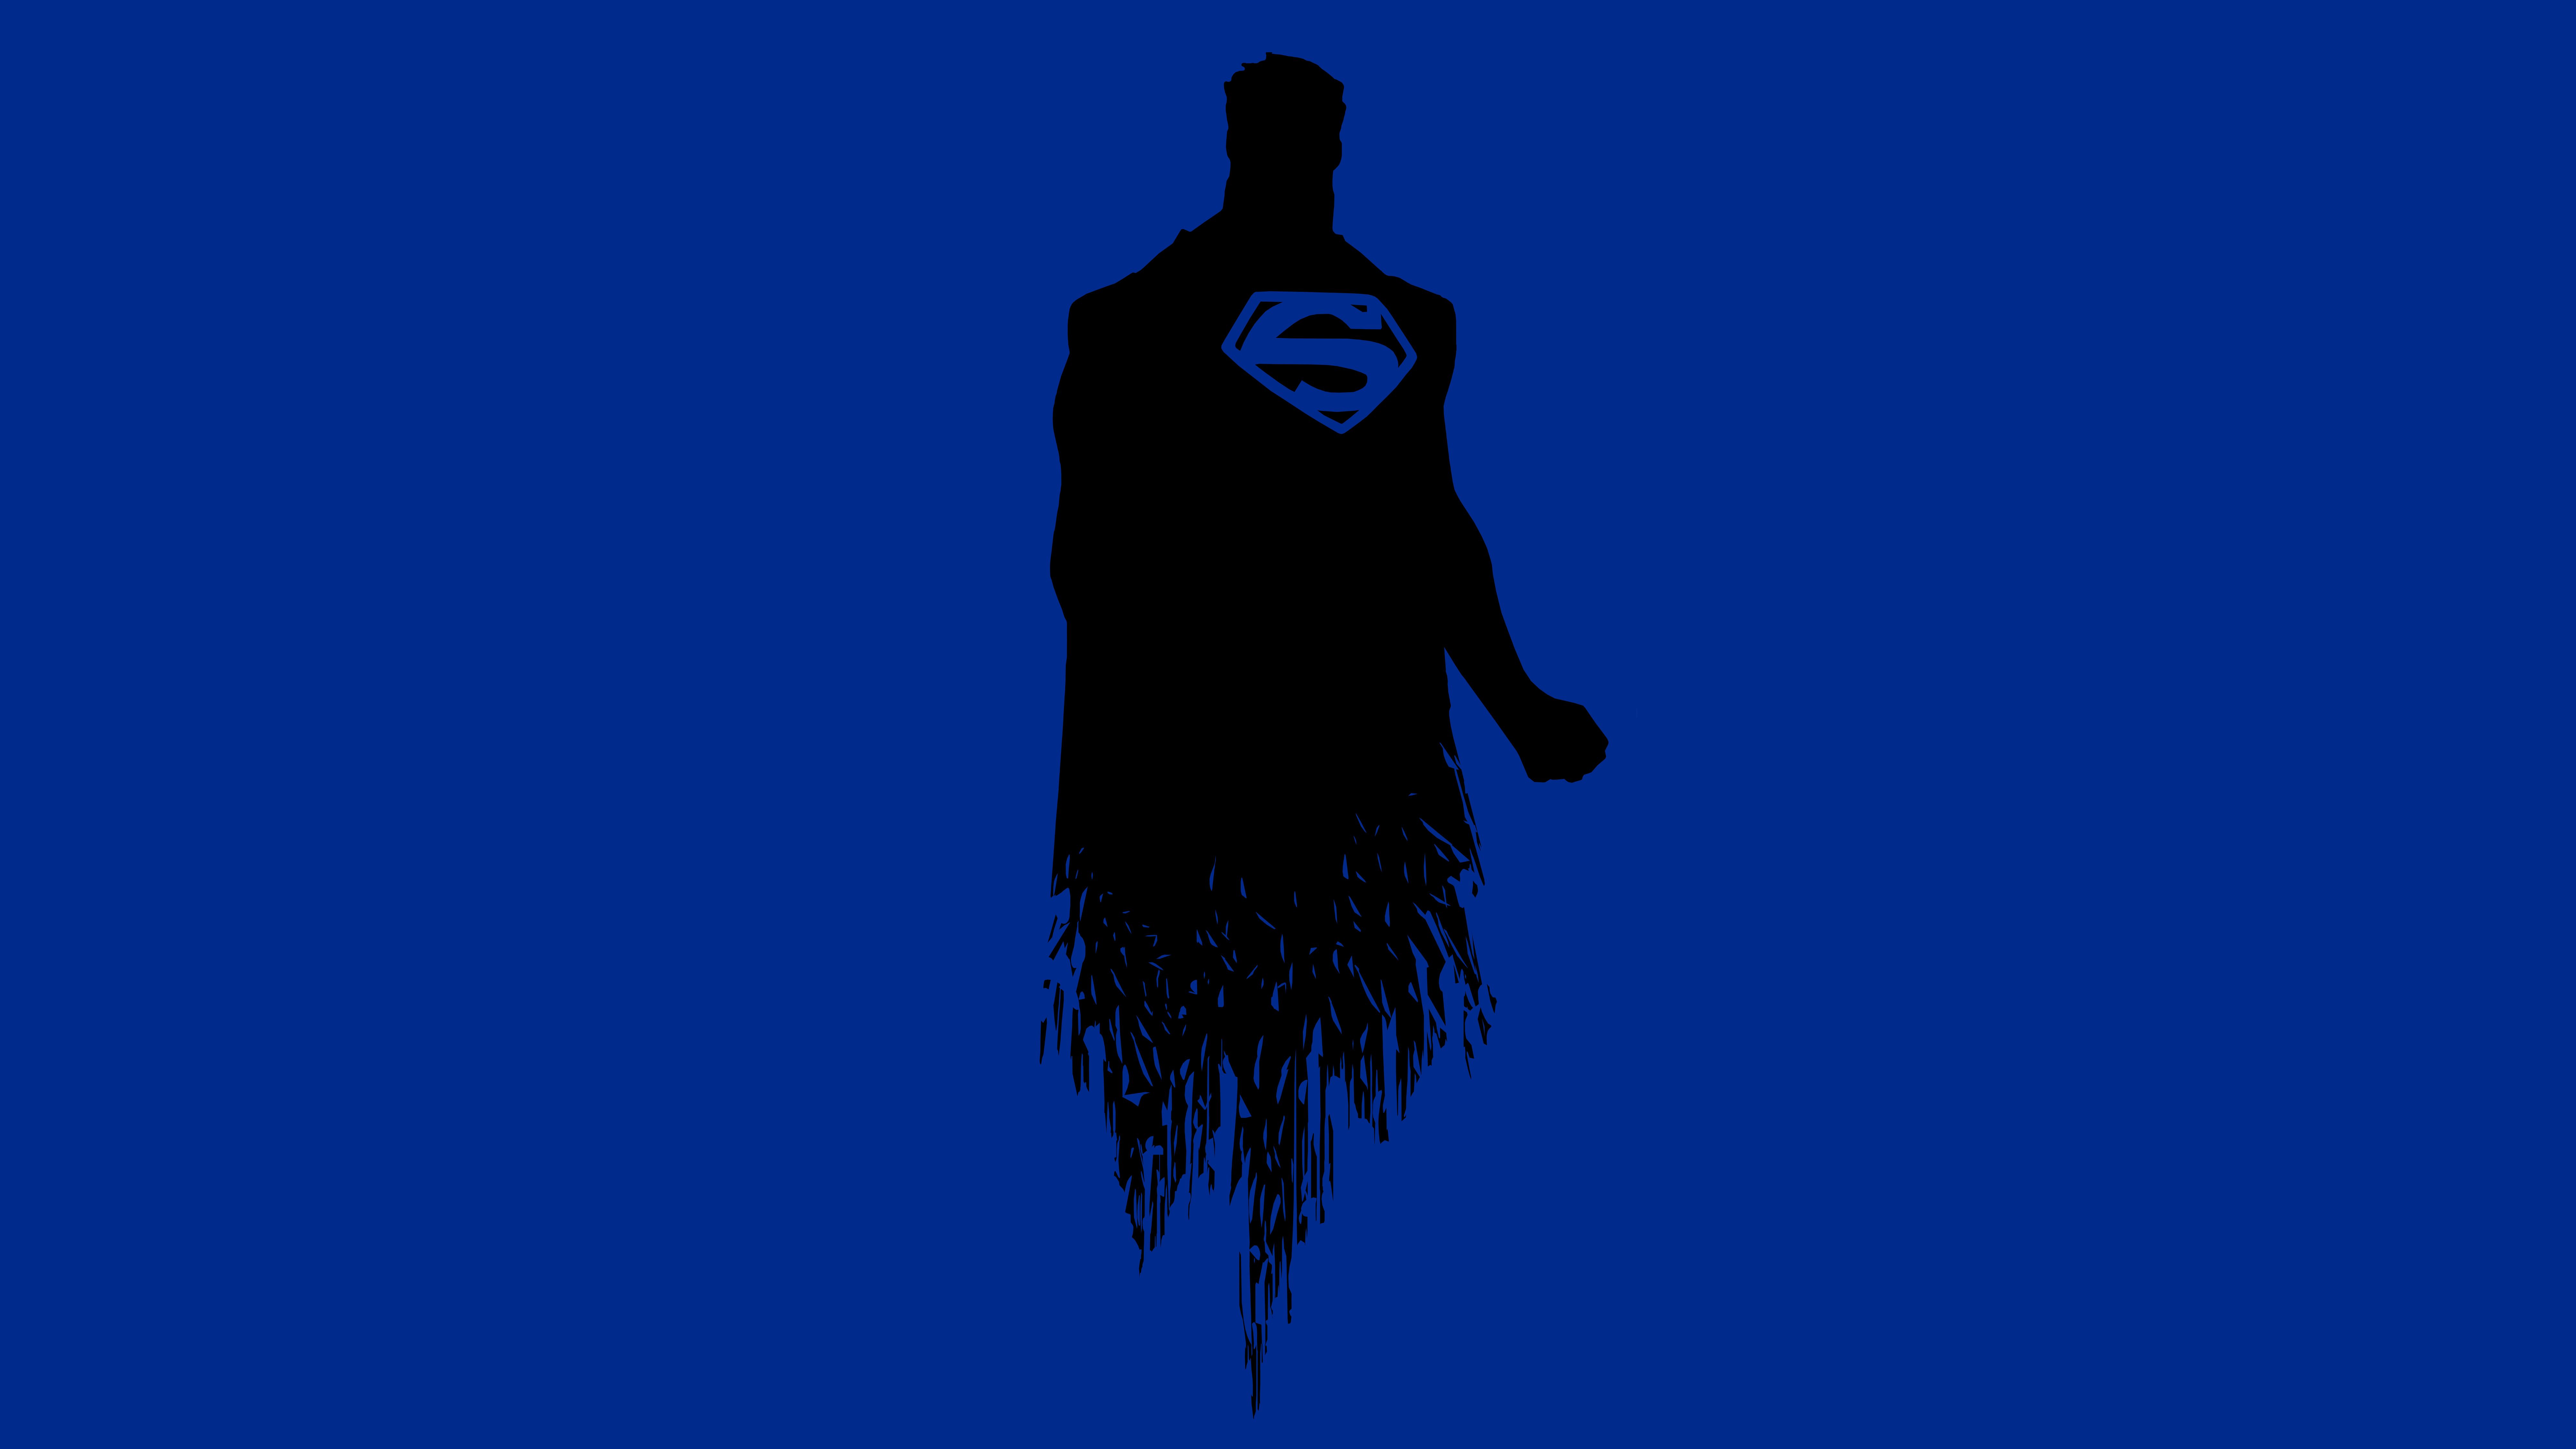 General 8000x4500 minimalism Superman DC Comics silhouette simple background blue background